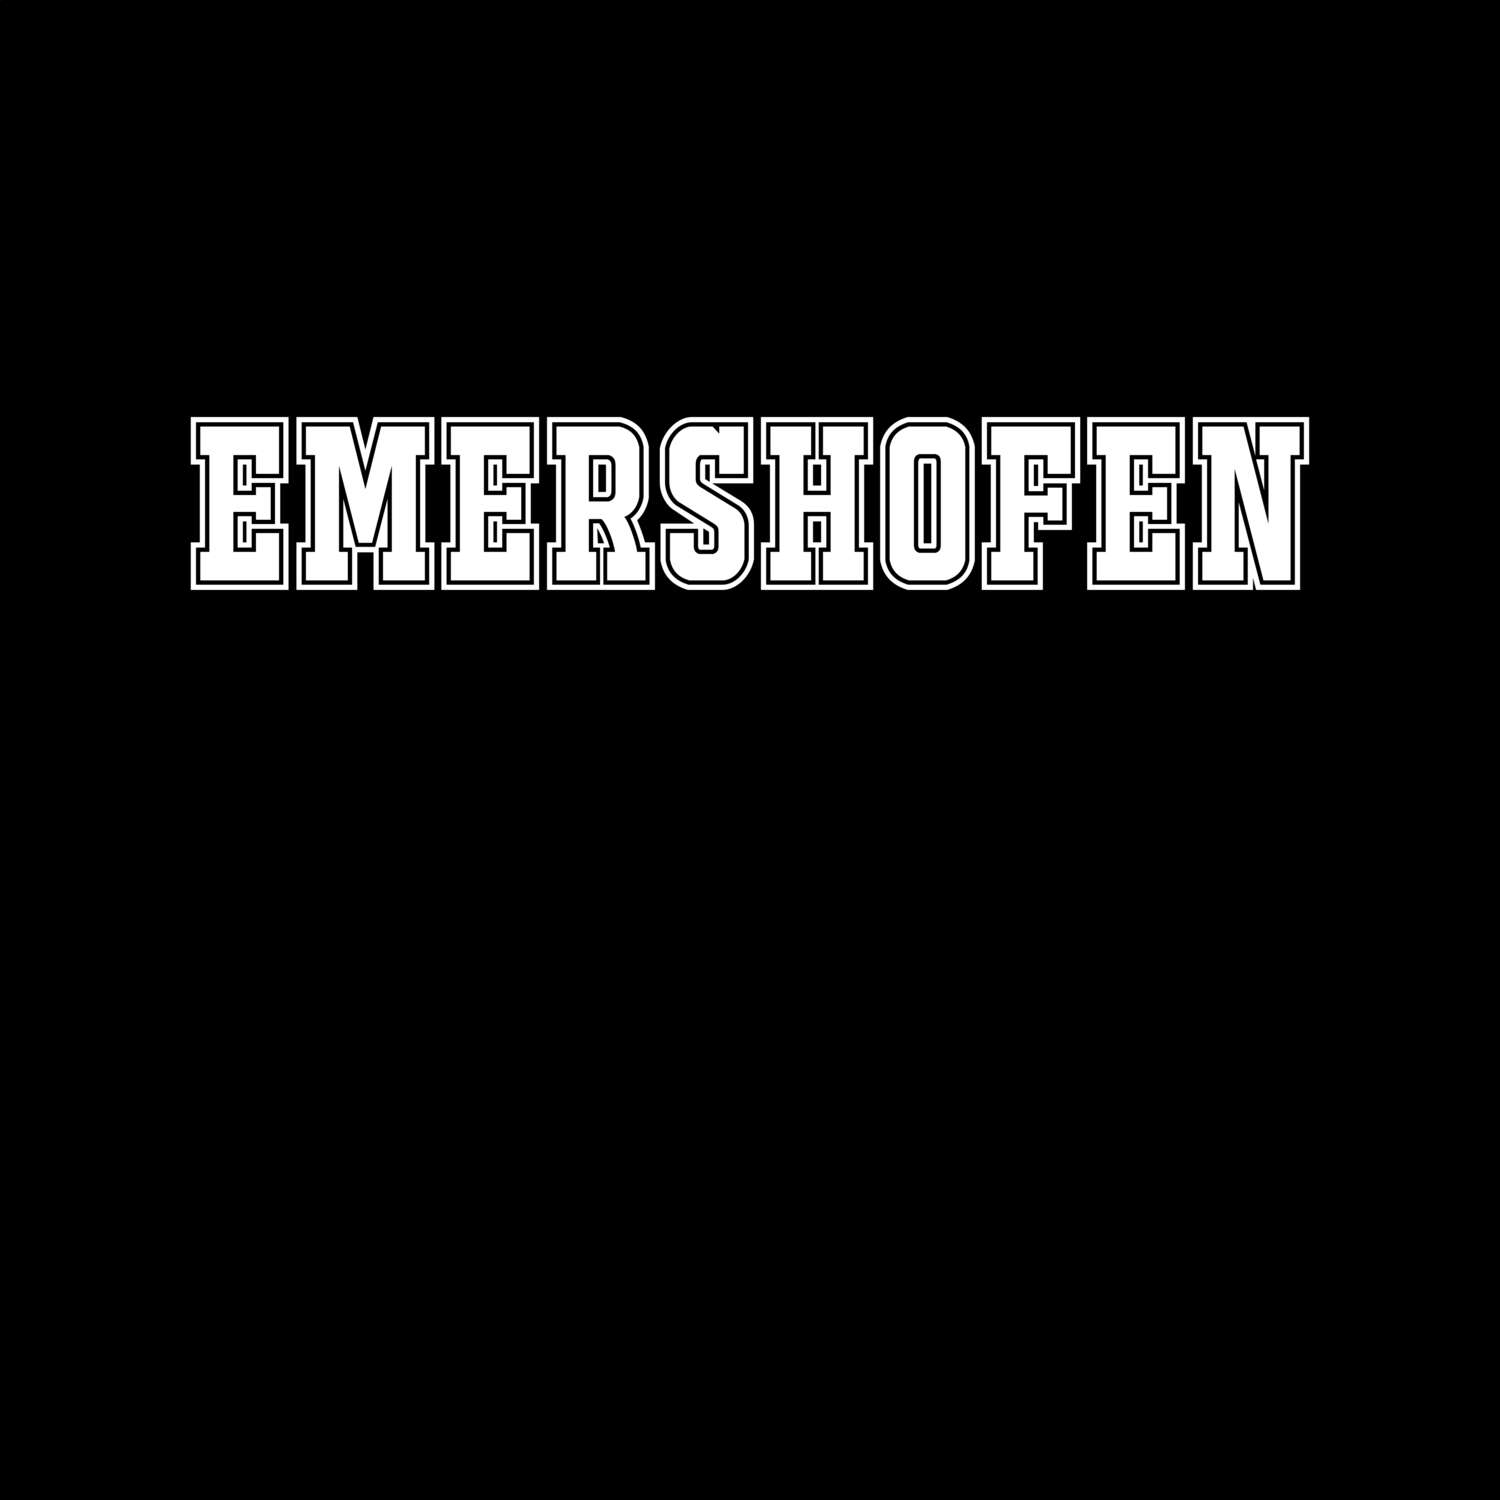 Emershofen T-Shirt »Classic«